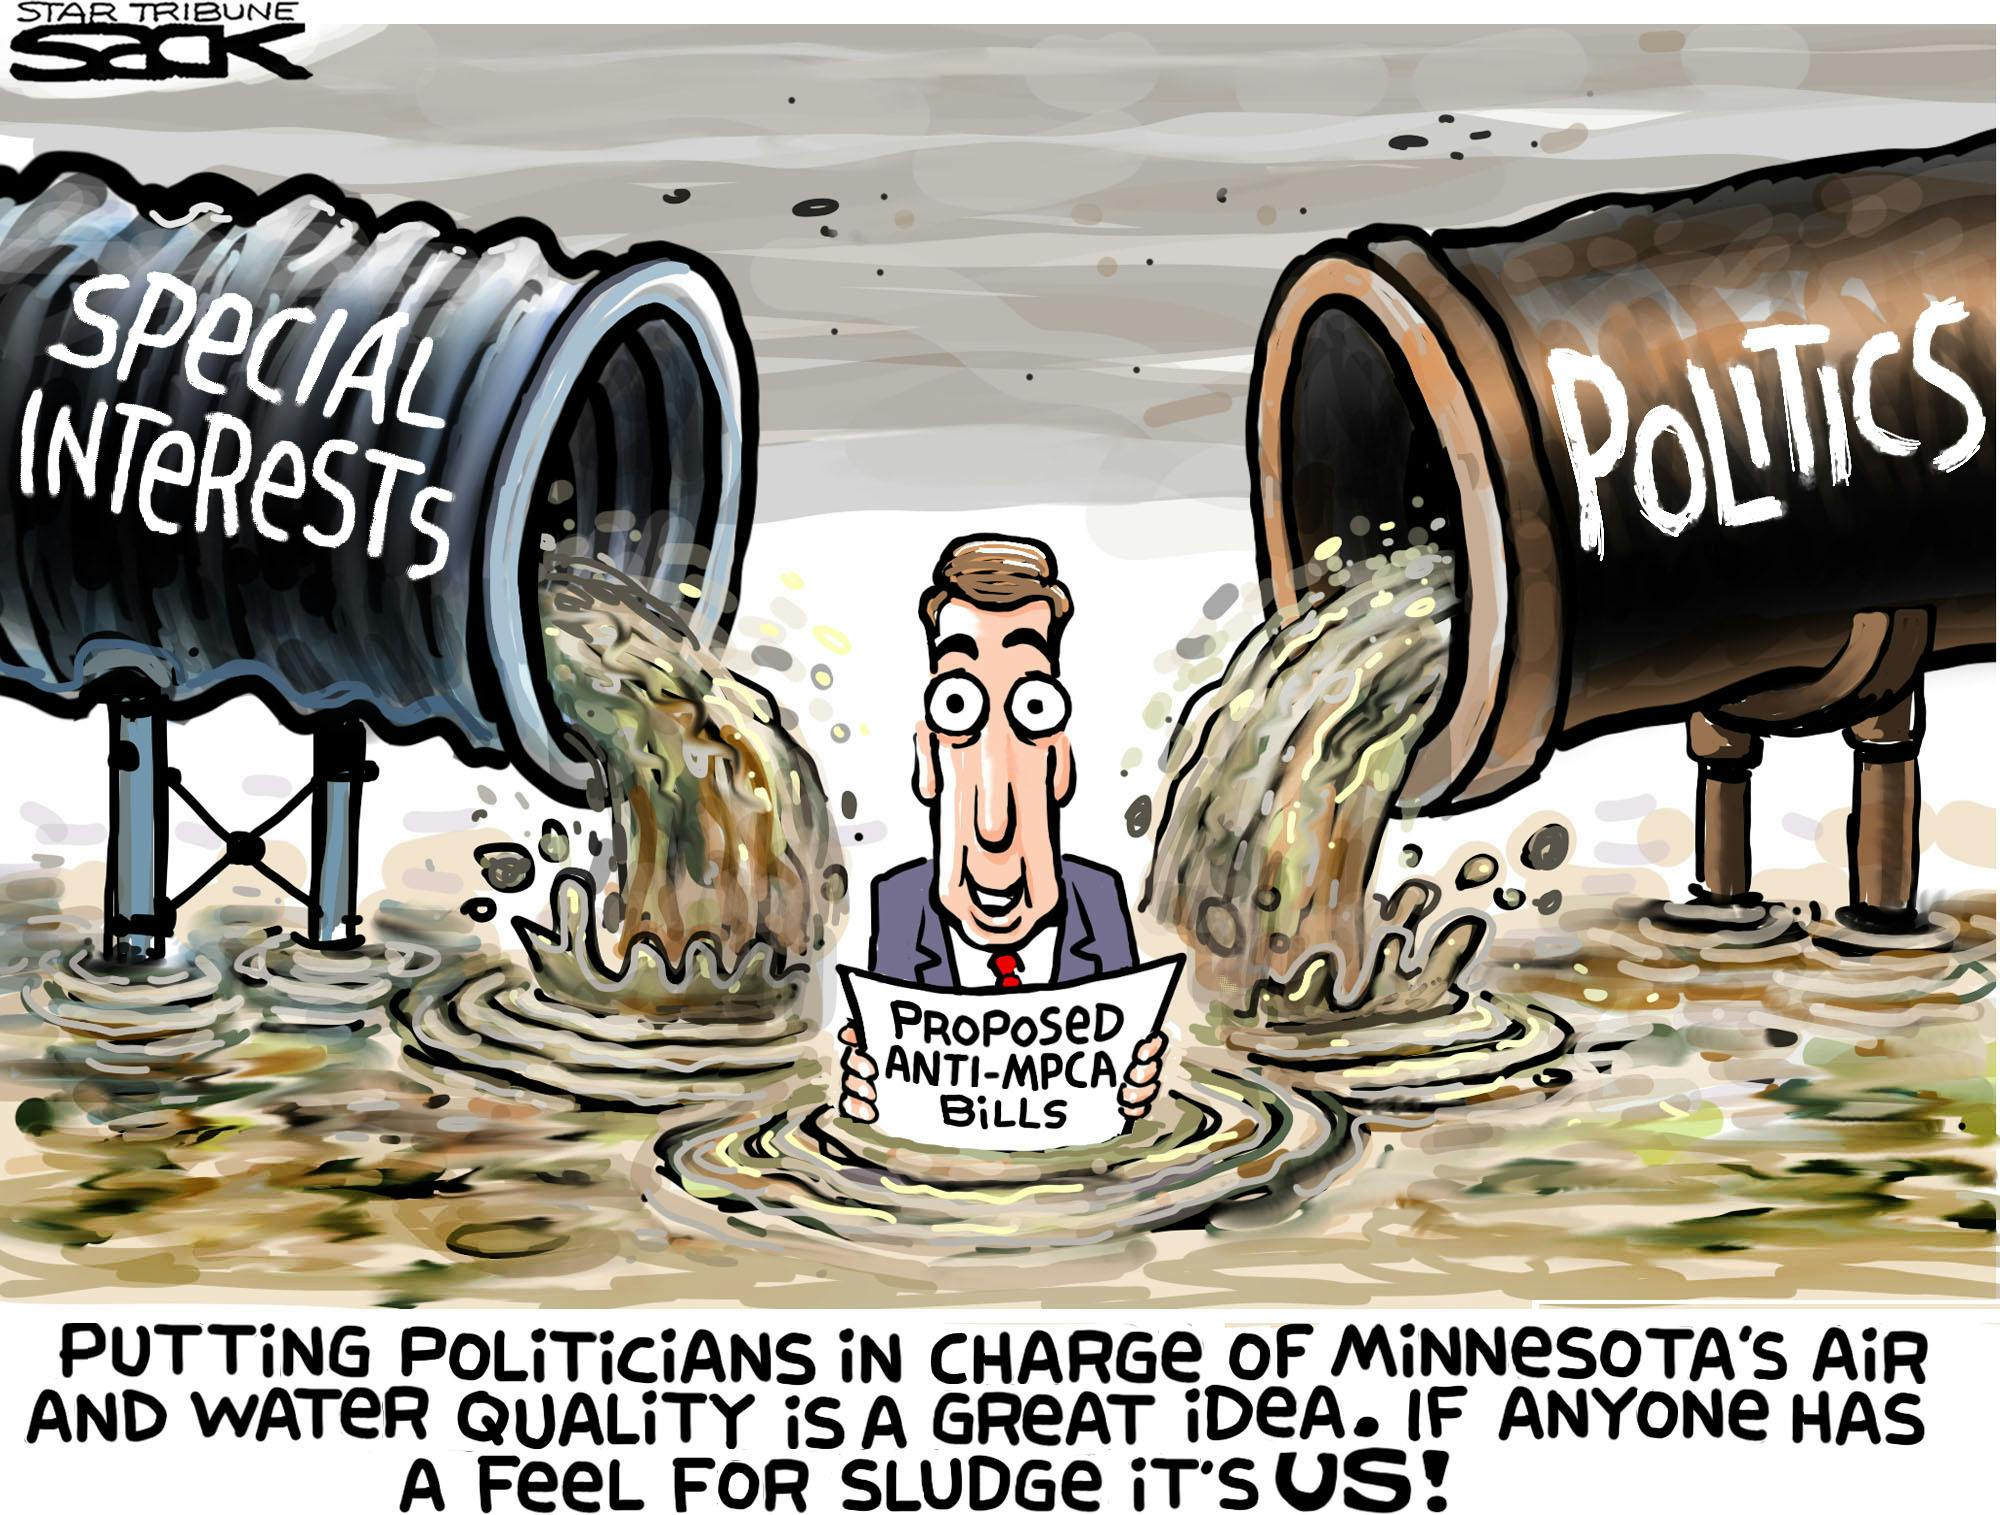 Sack cartoon: Politics and pollution